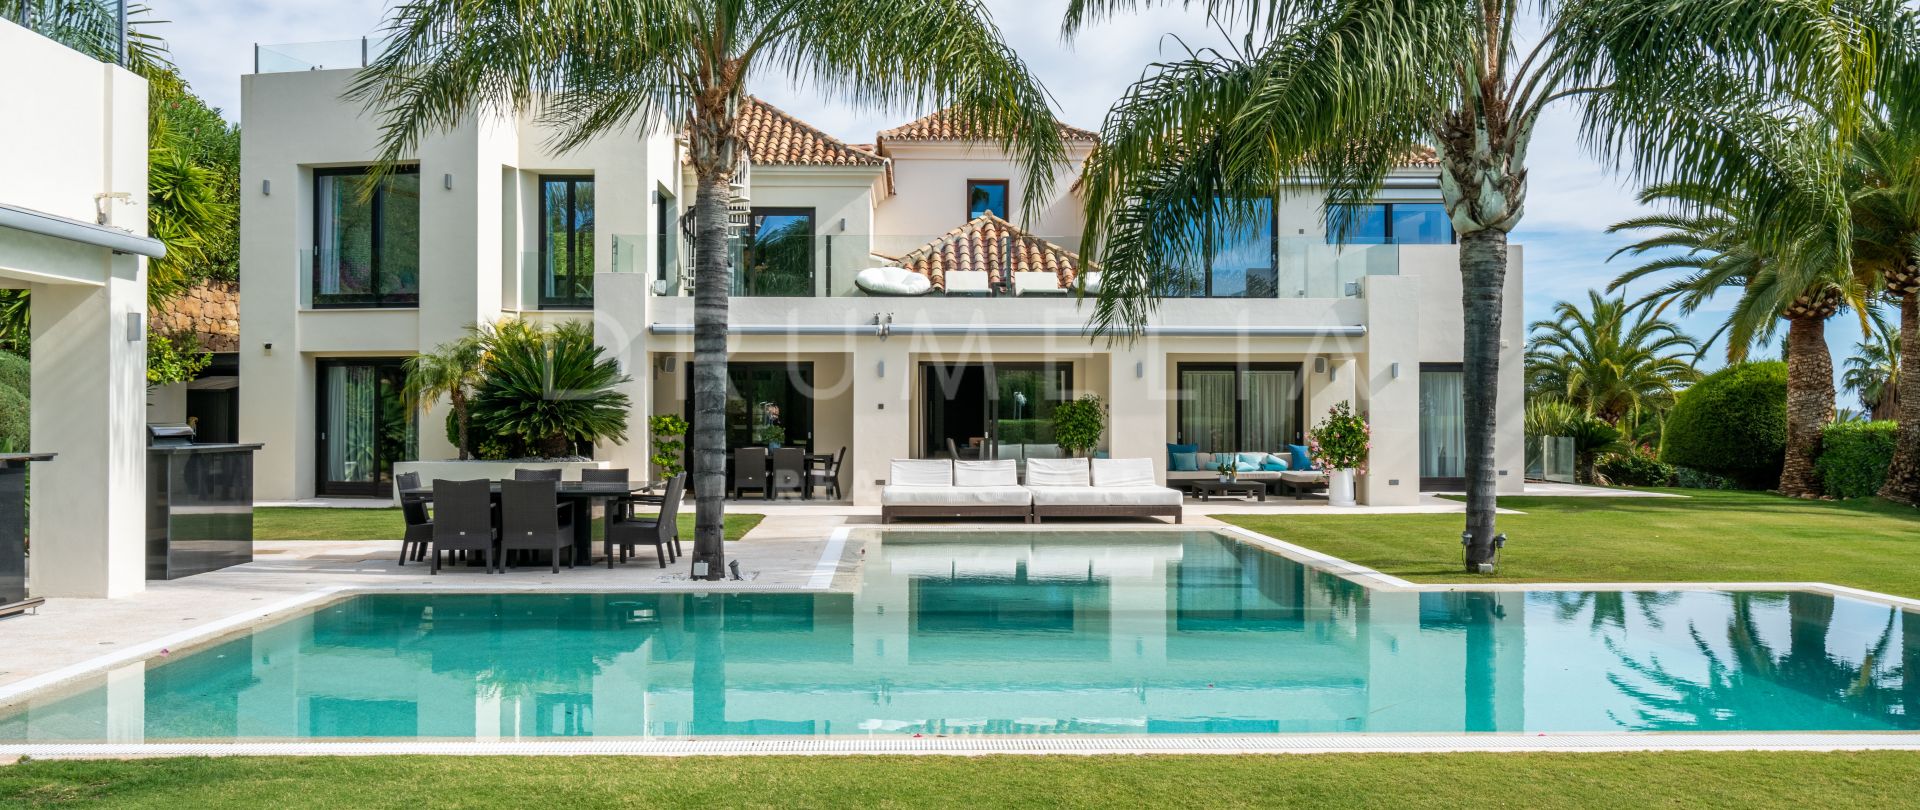 Atemberaubende moderne mediterrane Villa, Sierra Blanca, Marbella Goldene Meile